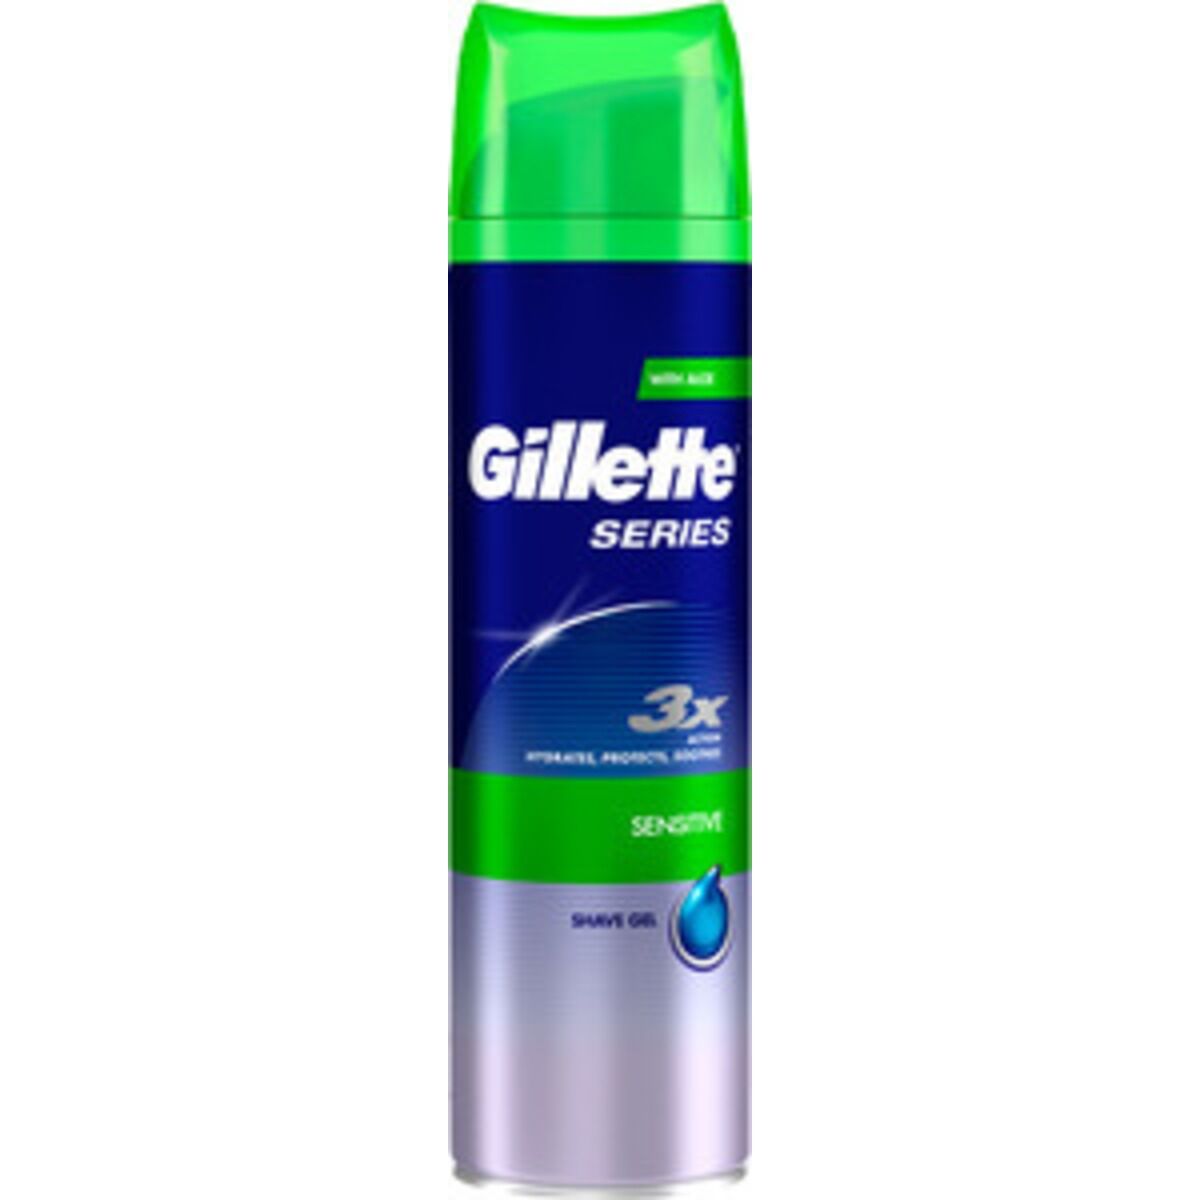 Gillette Barbergel Sensitive Skin - 200 ml - 1 Stk.